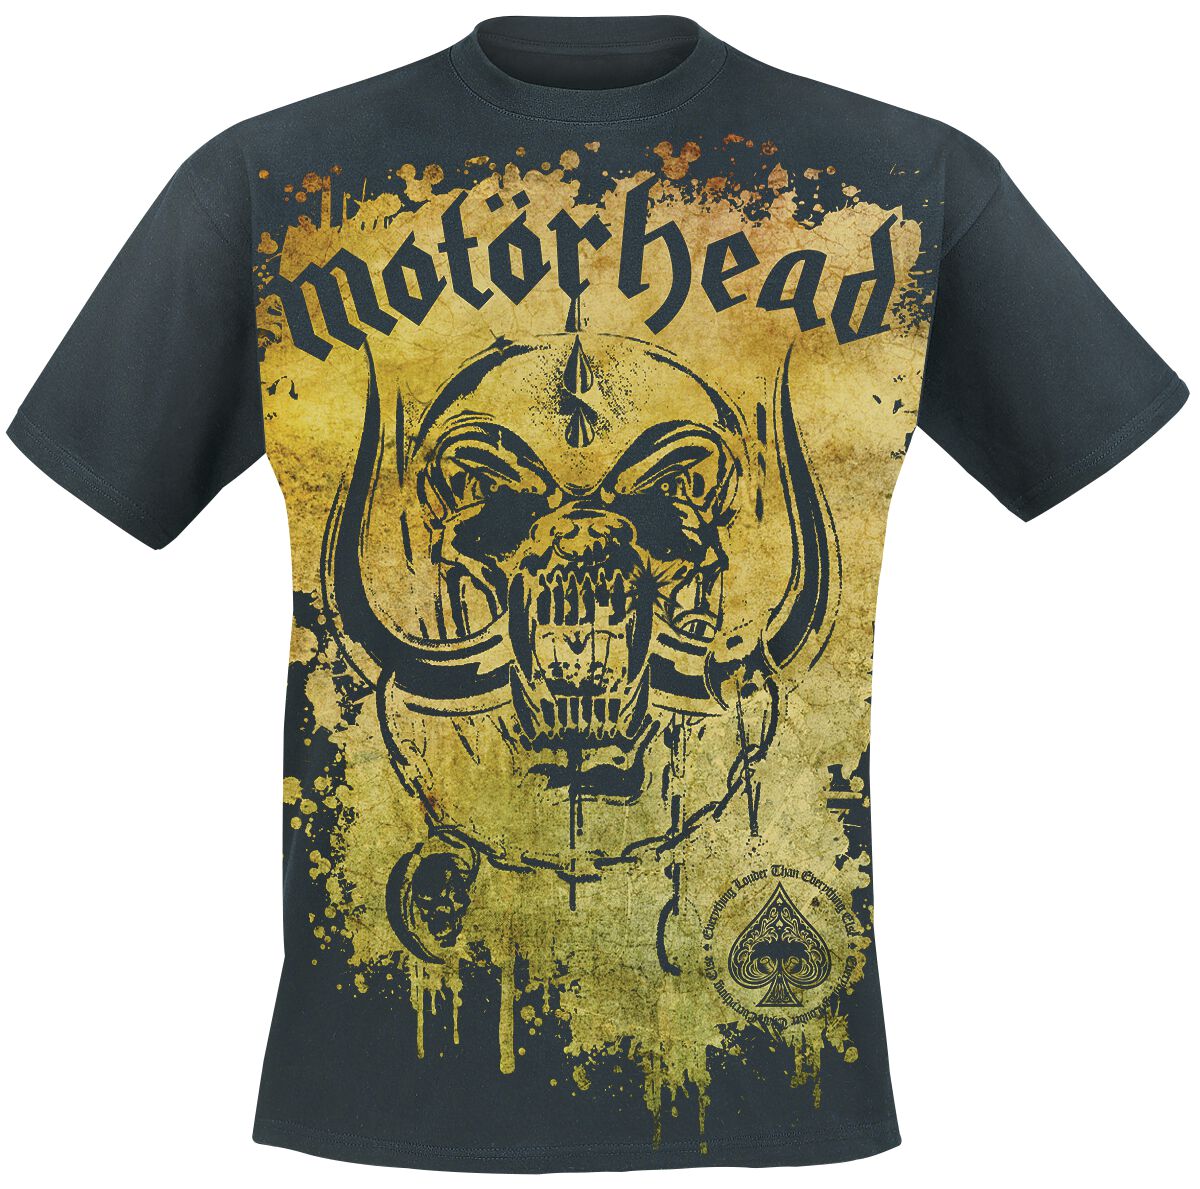 Image of T-Shirt di Motörhead - Acid Splatter - M a 3XL - Uomo - nero